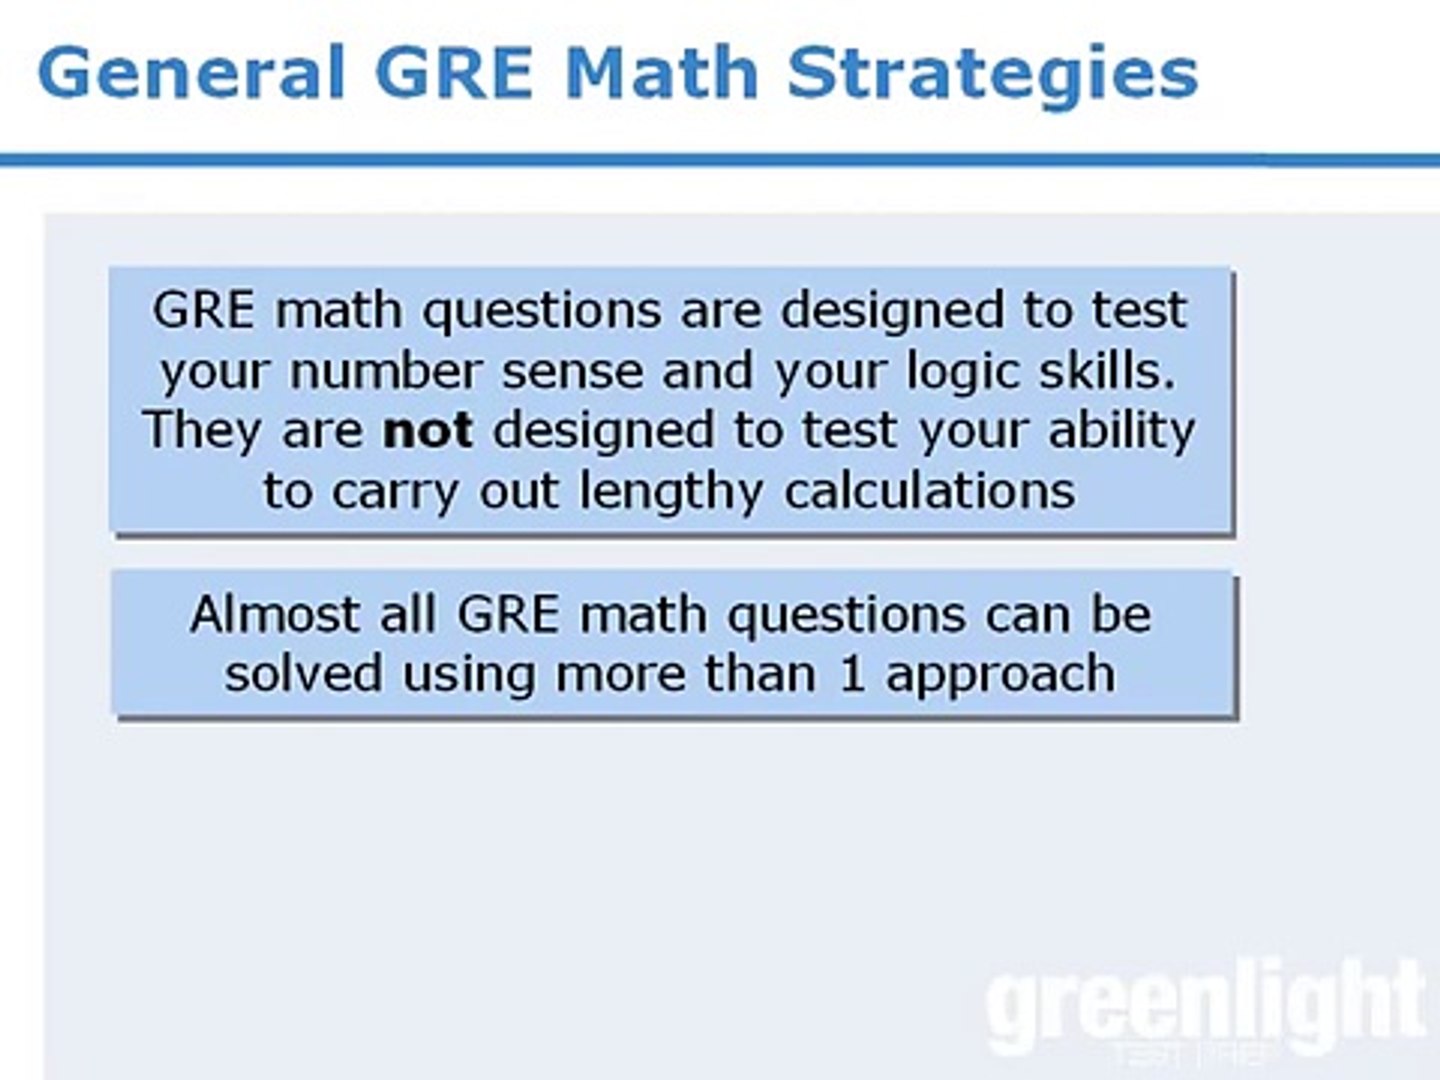 GRE Math - General GRE Math Strategies